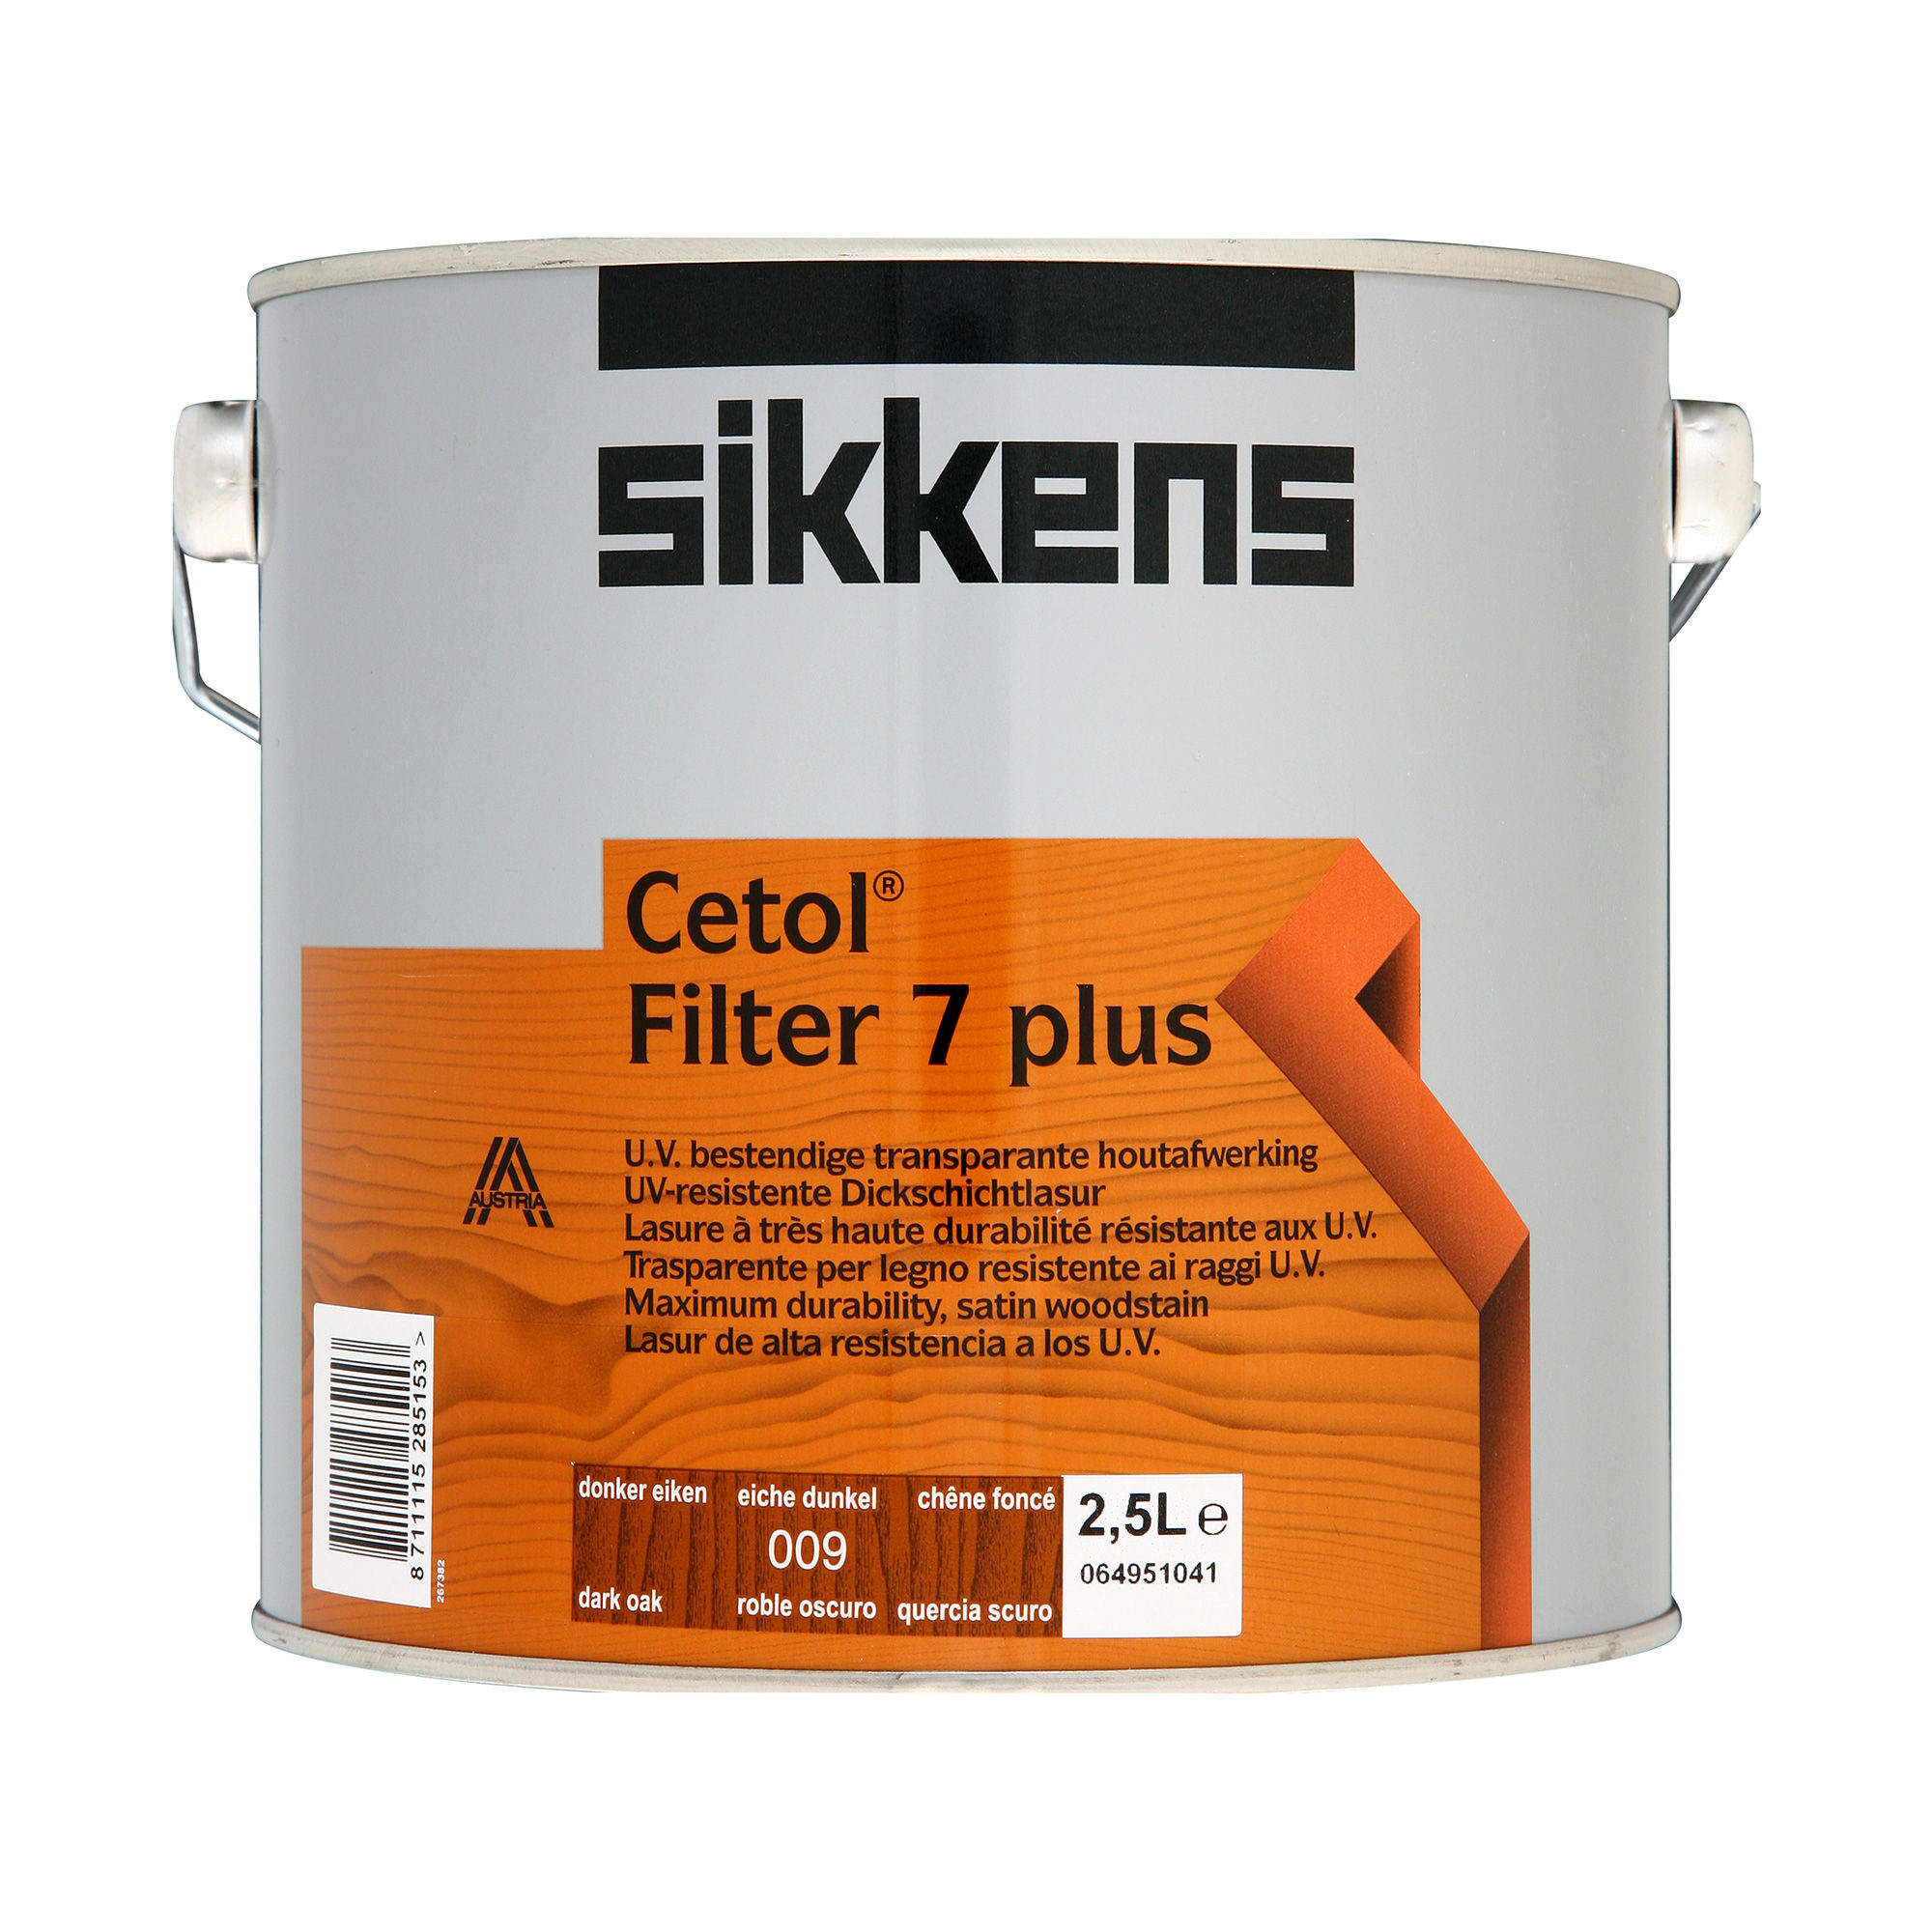 Sikkens Cetol Filter 7 Plus Wood Stain – Dark Oak 009 (2.5L)